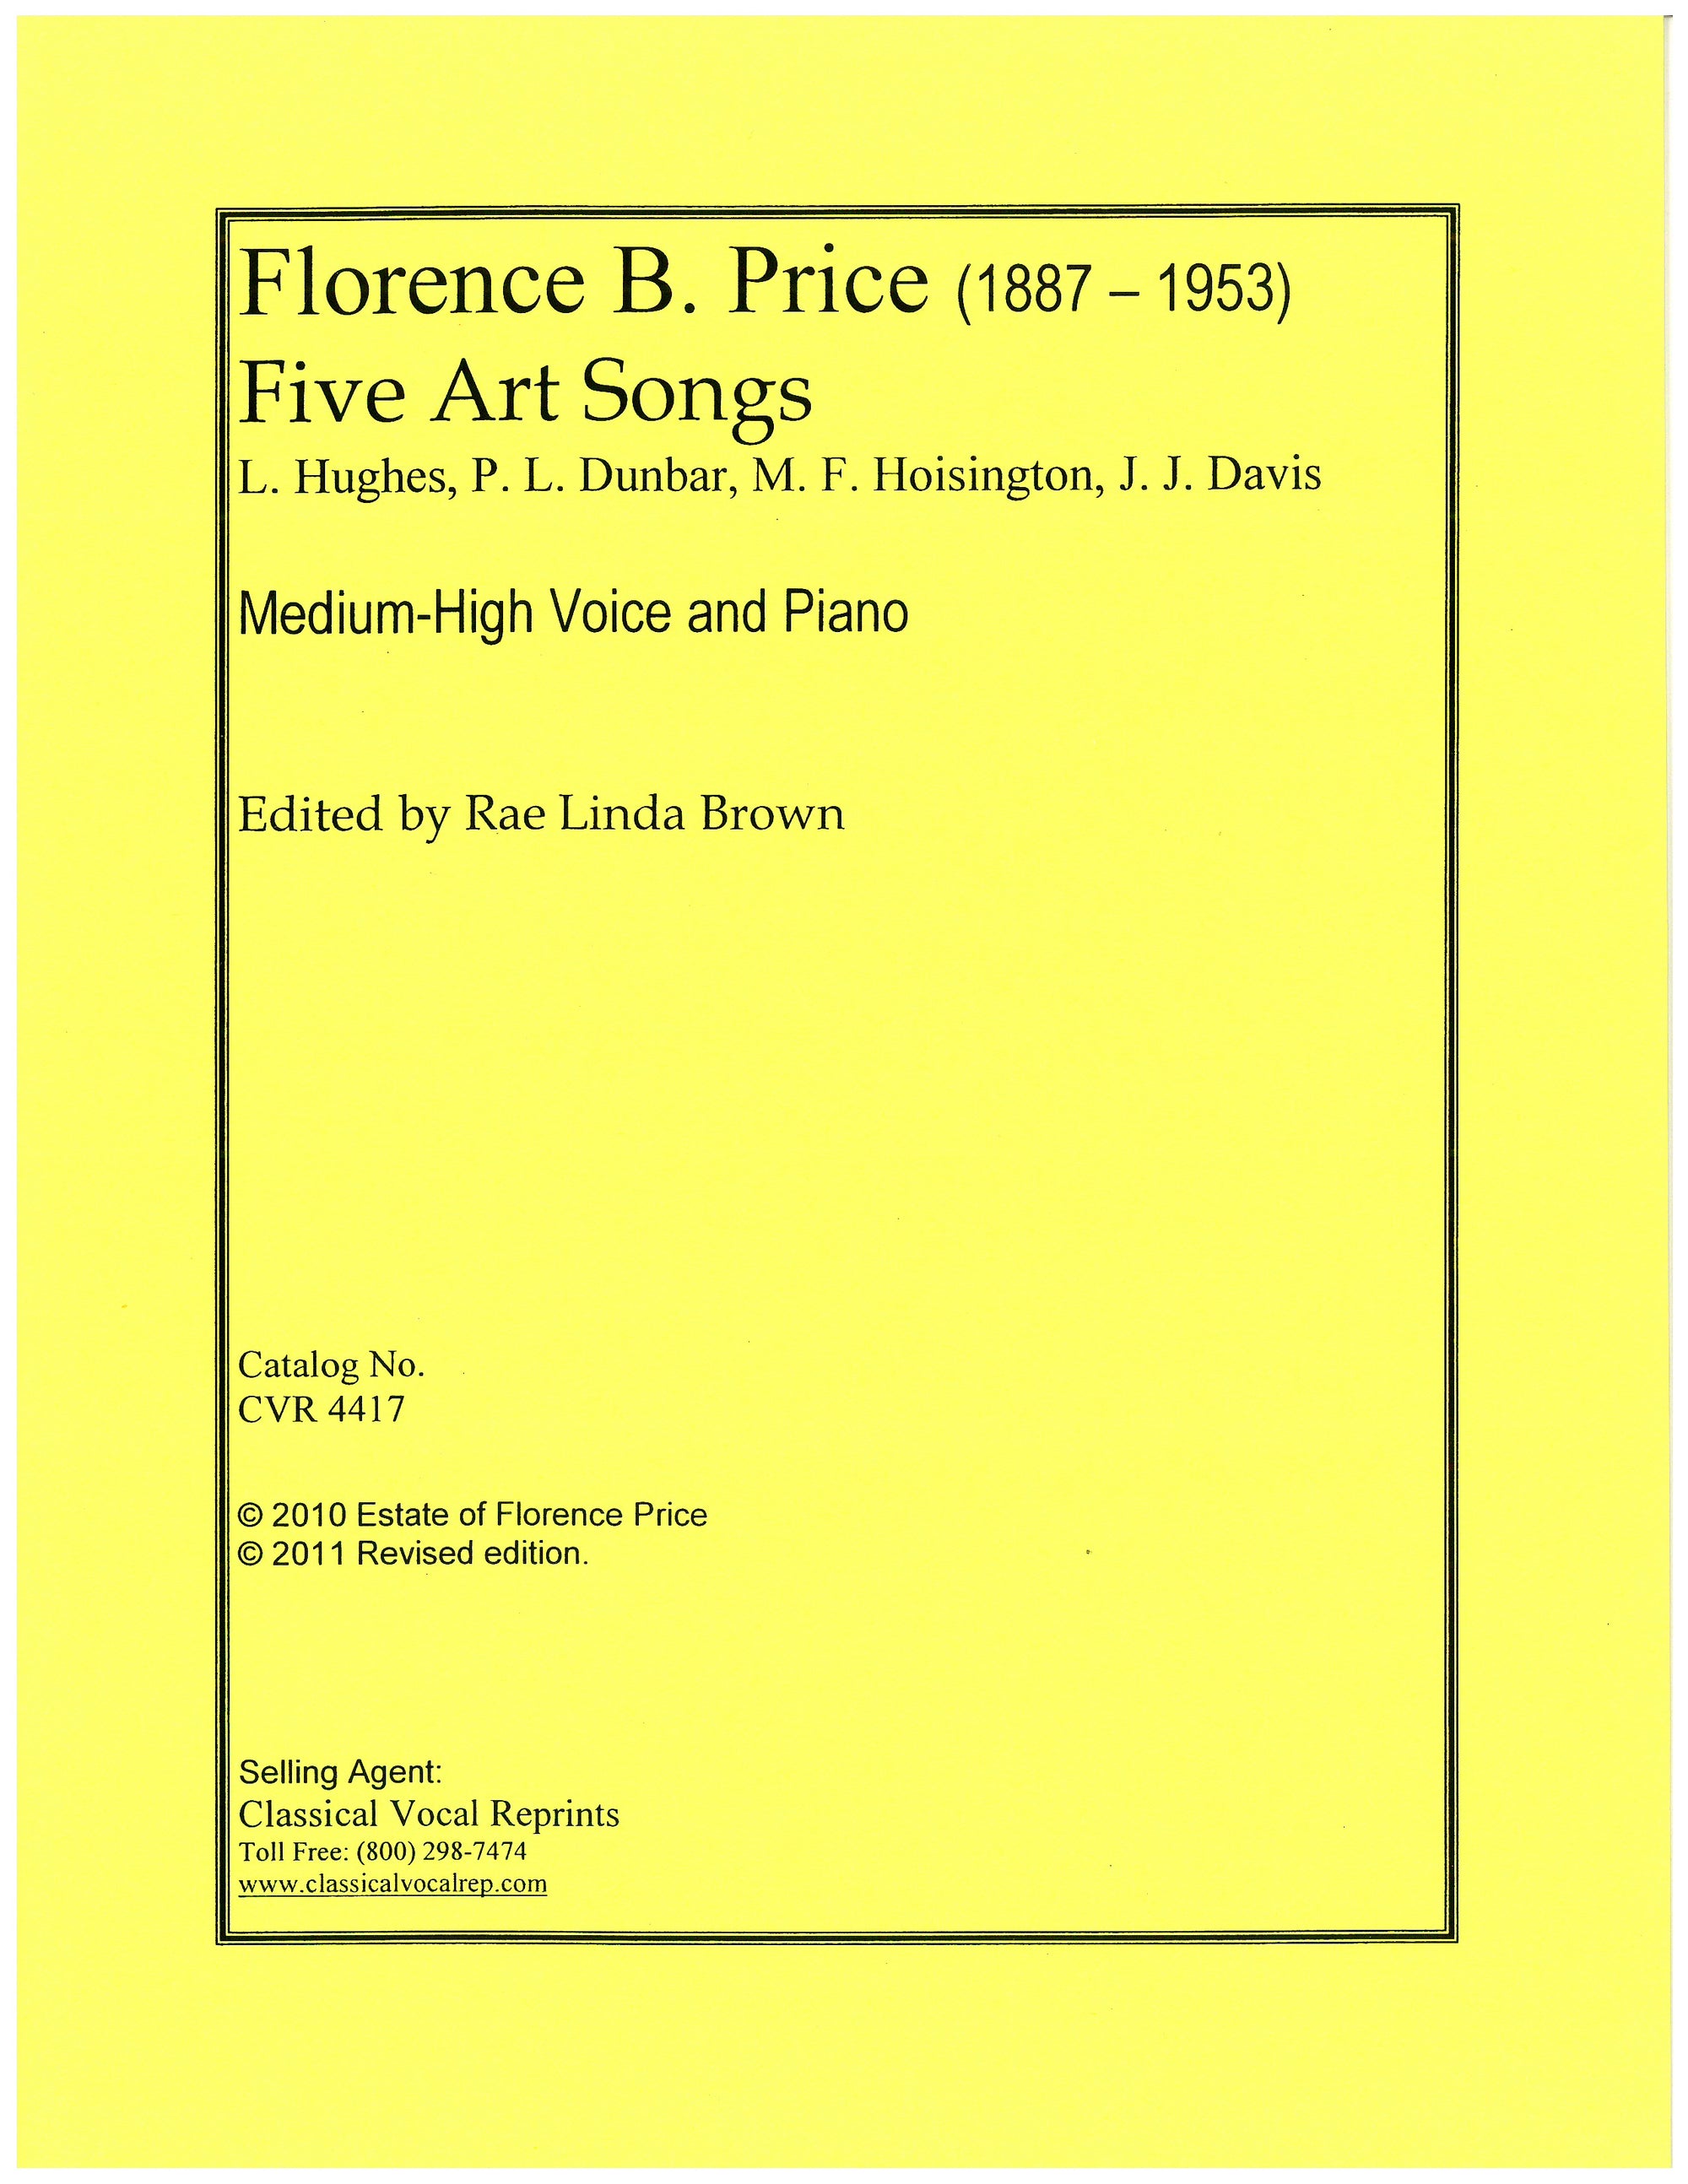 Price: Five Art Songs